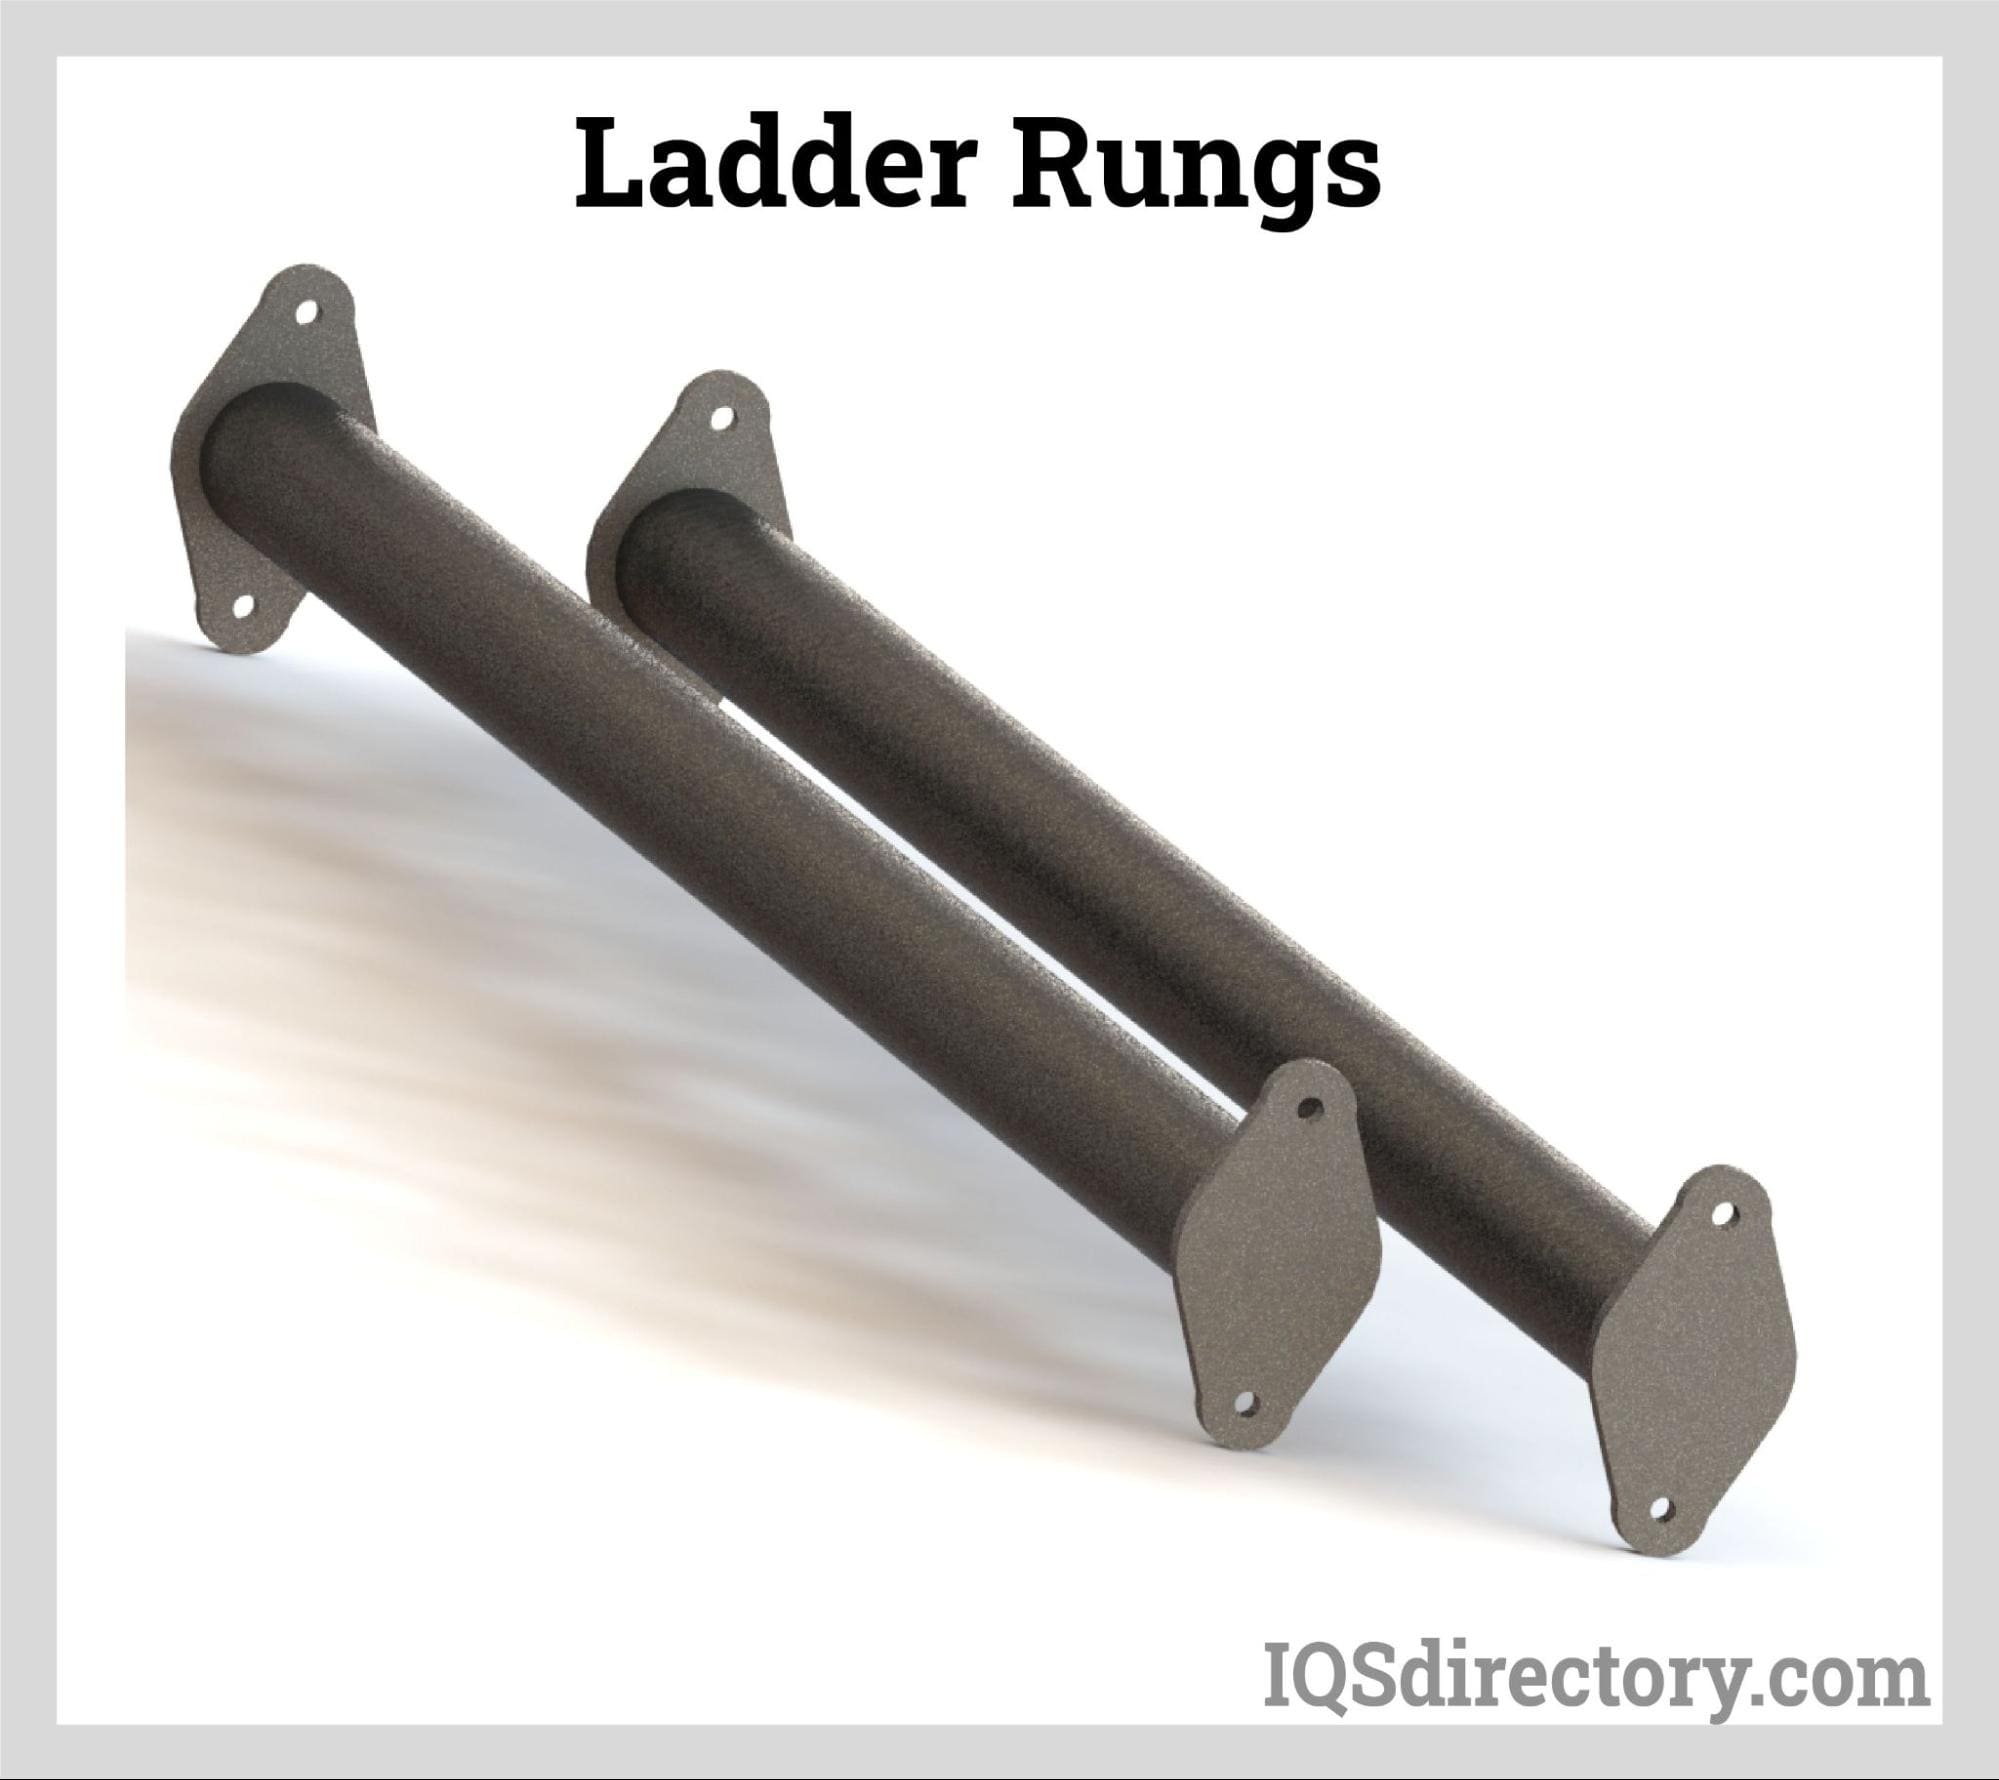 Ladder Rungs